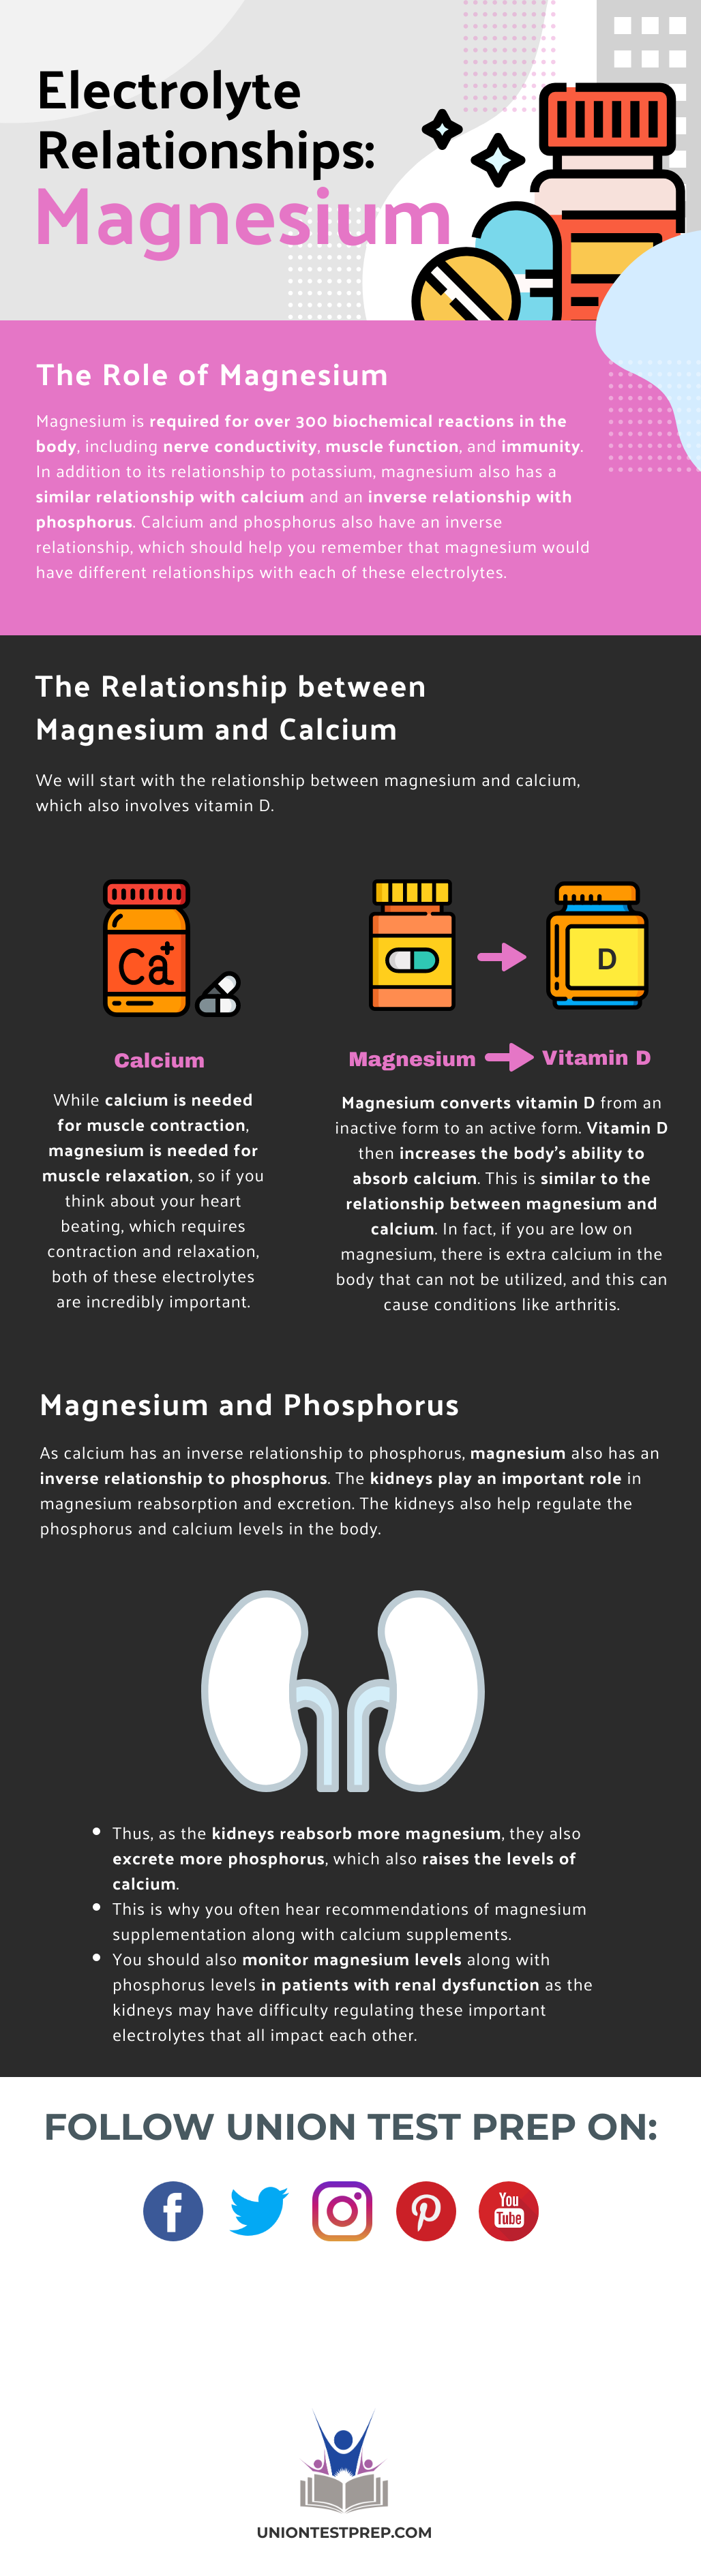 Electrolyte Relationships: Magnesium